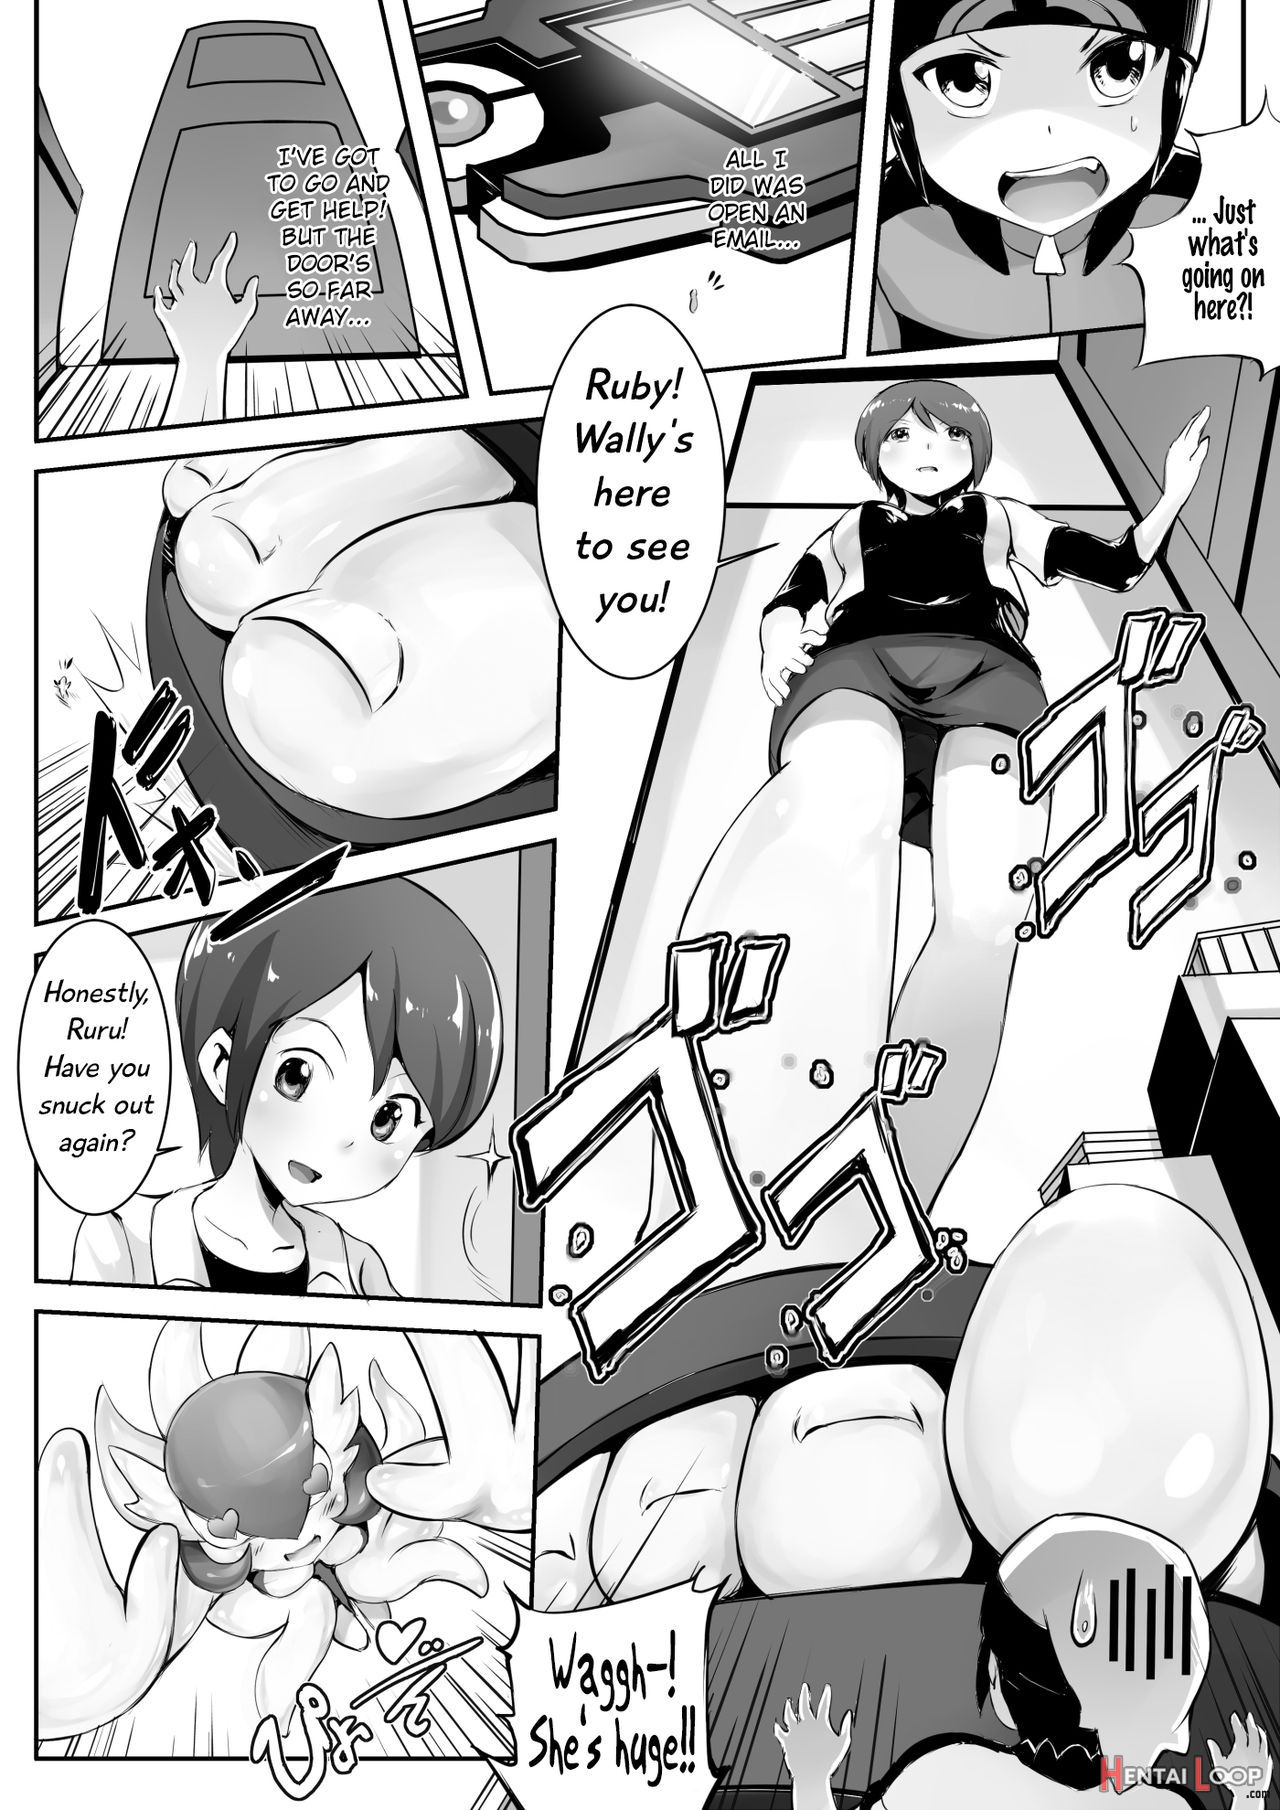 Pokemon Gs - Begin page 3